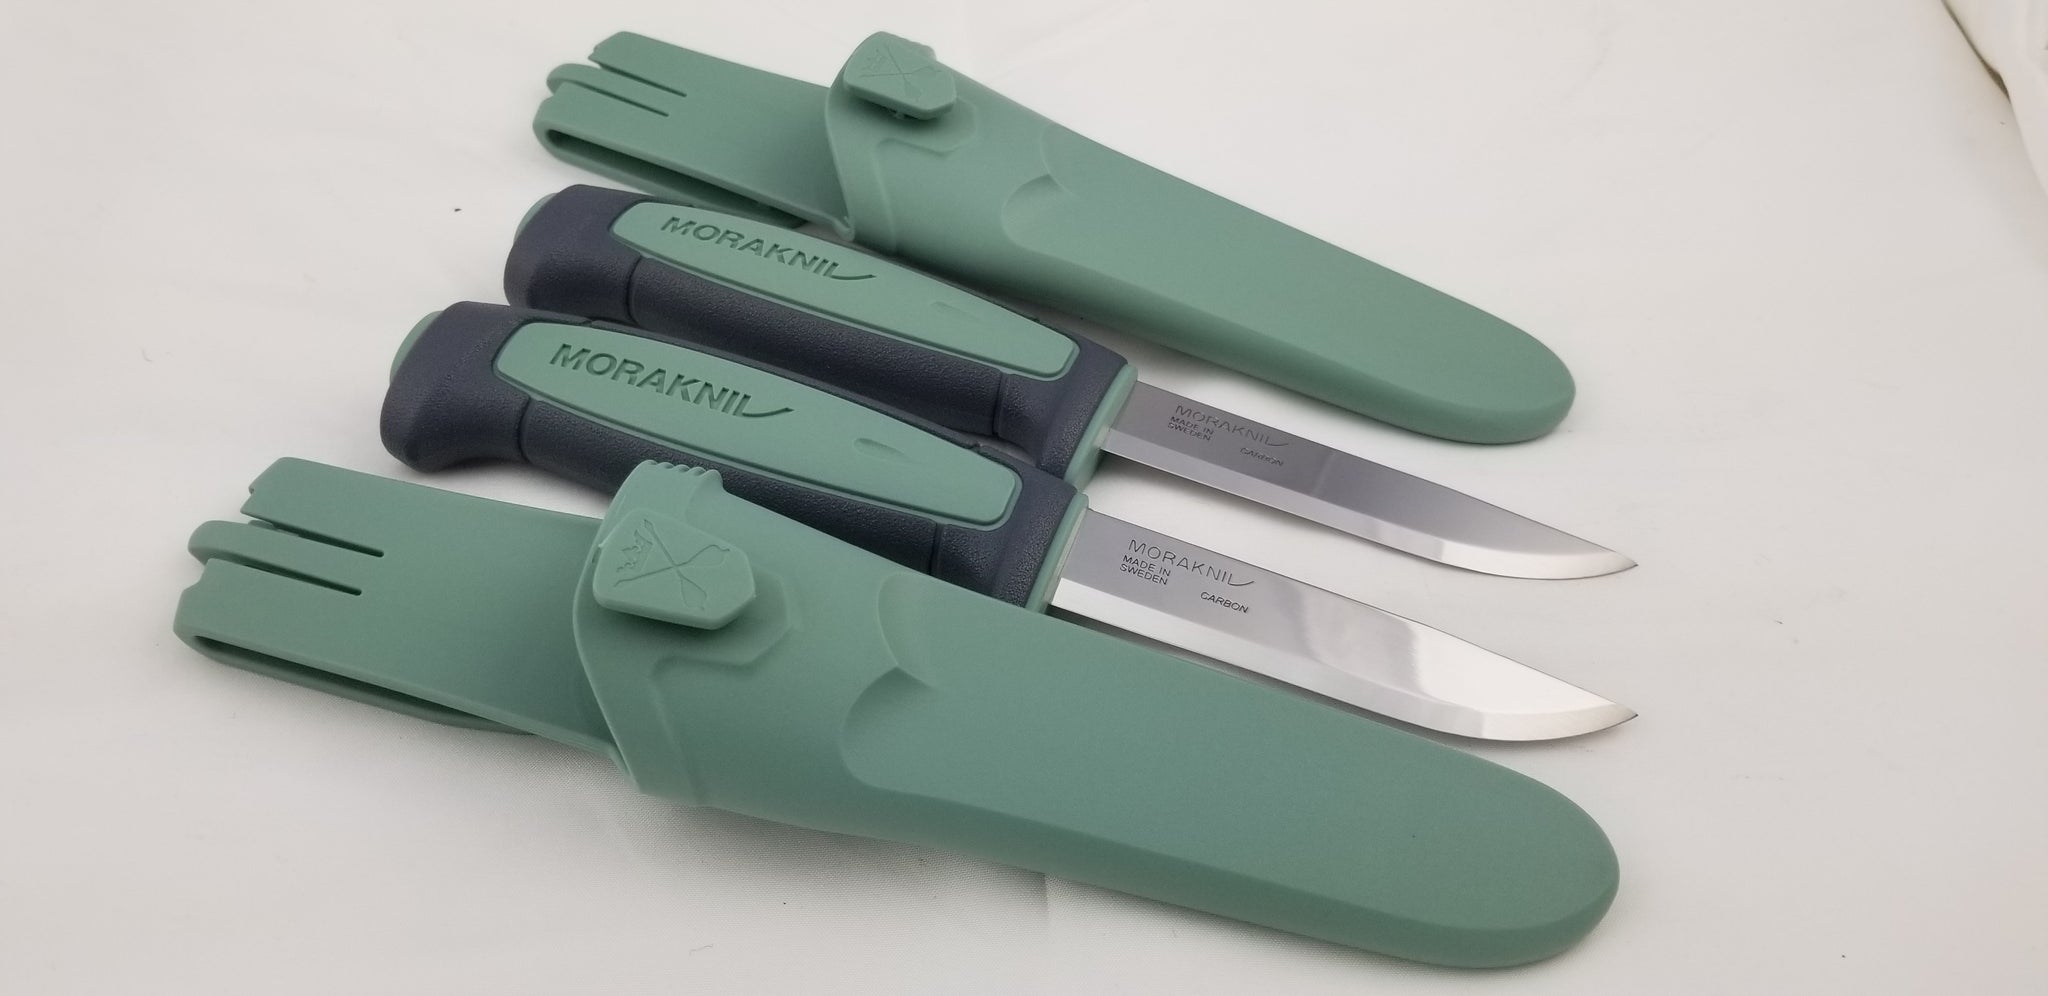 2 Pack Lot - Morakniv Basic 511 Knife & Sheath - 2 Green Mora Knives &  Sheaths